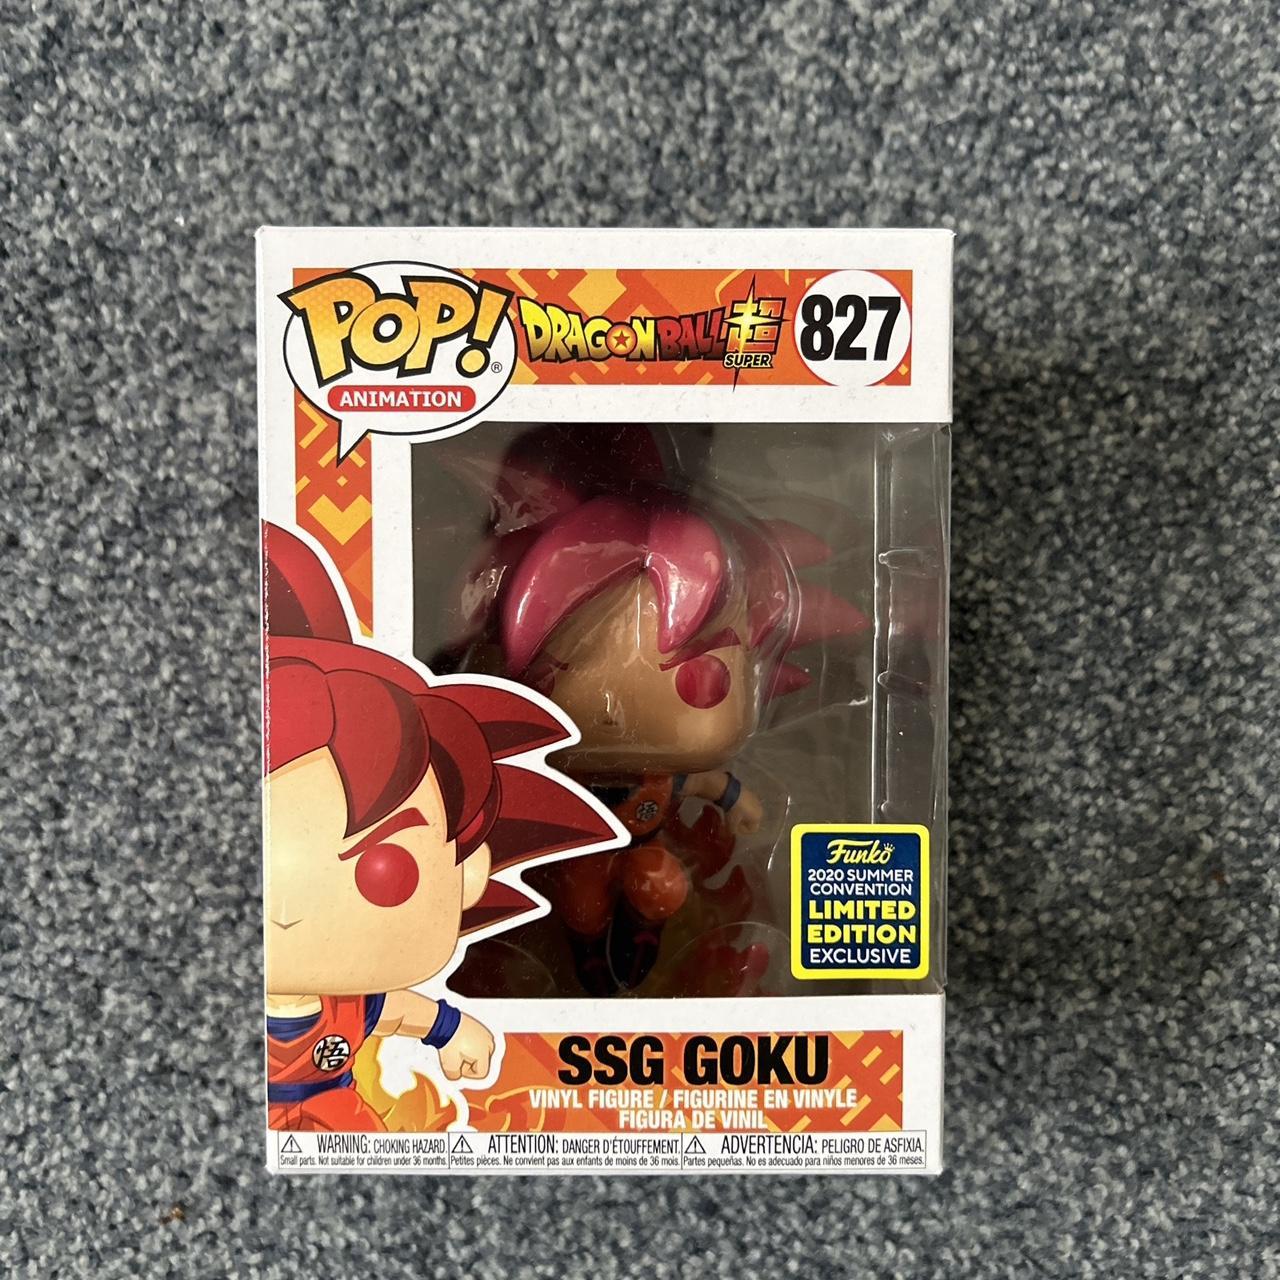 Figurine Ssg Goku / Dragon Ball Super / Funko Pop Animation 827